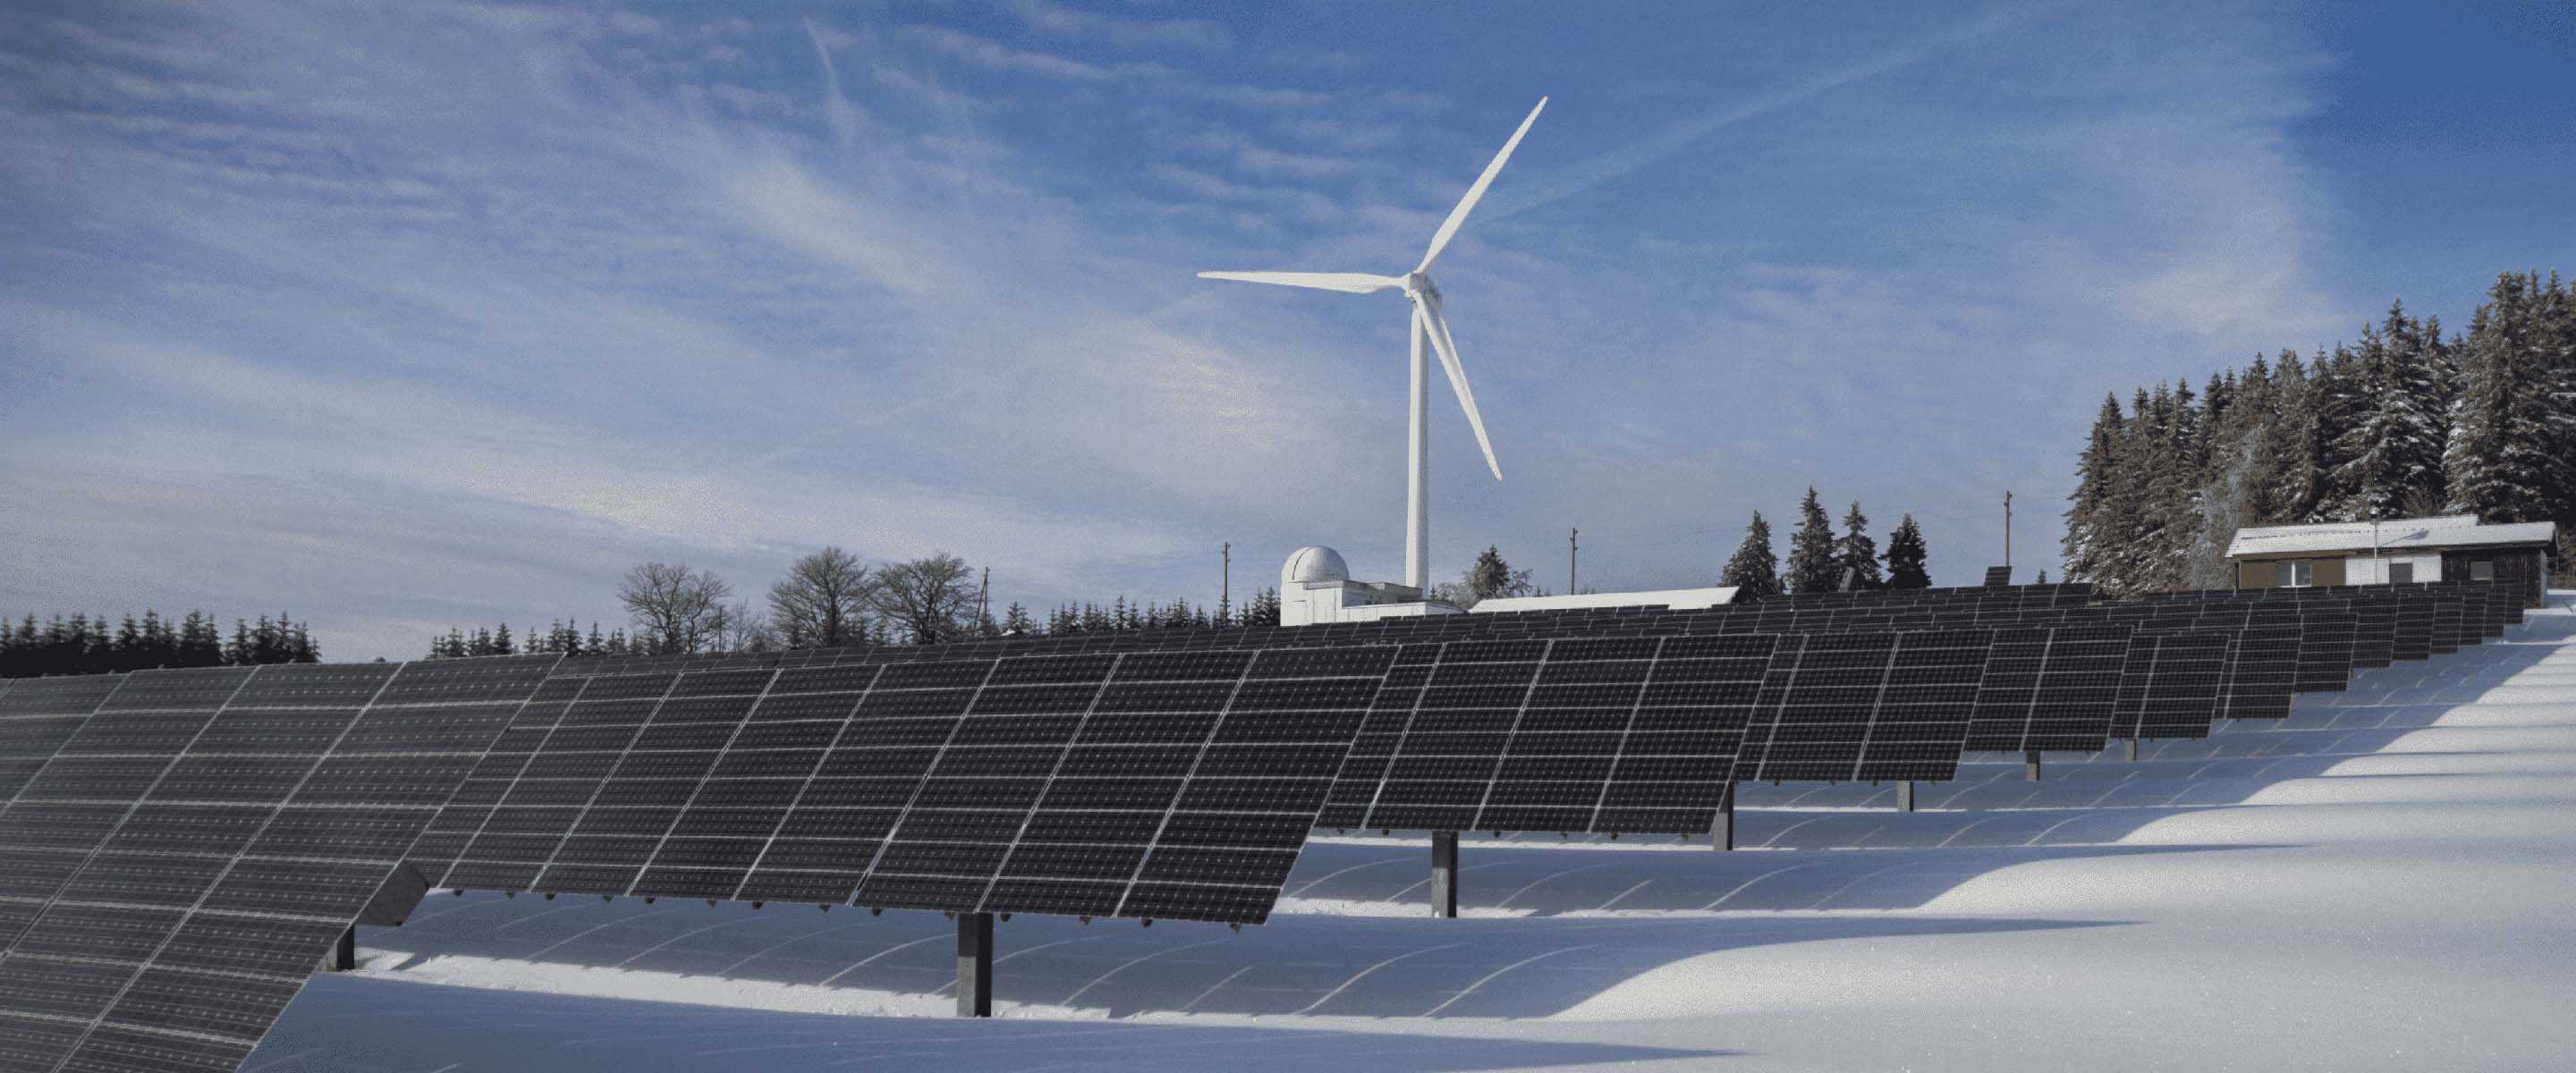 A row of solar panels and a single wind turbine.